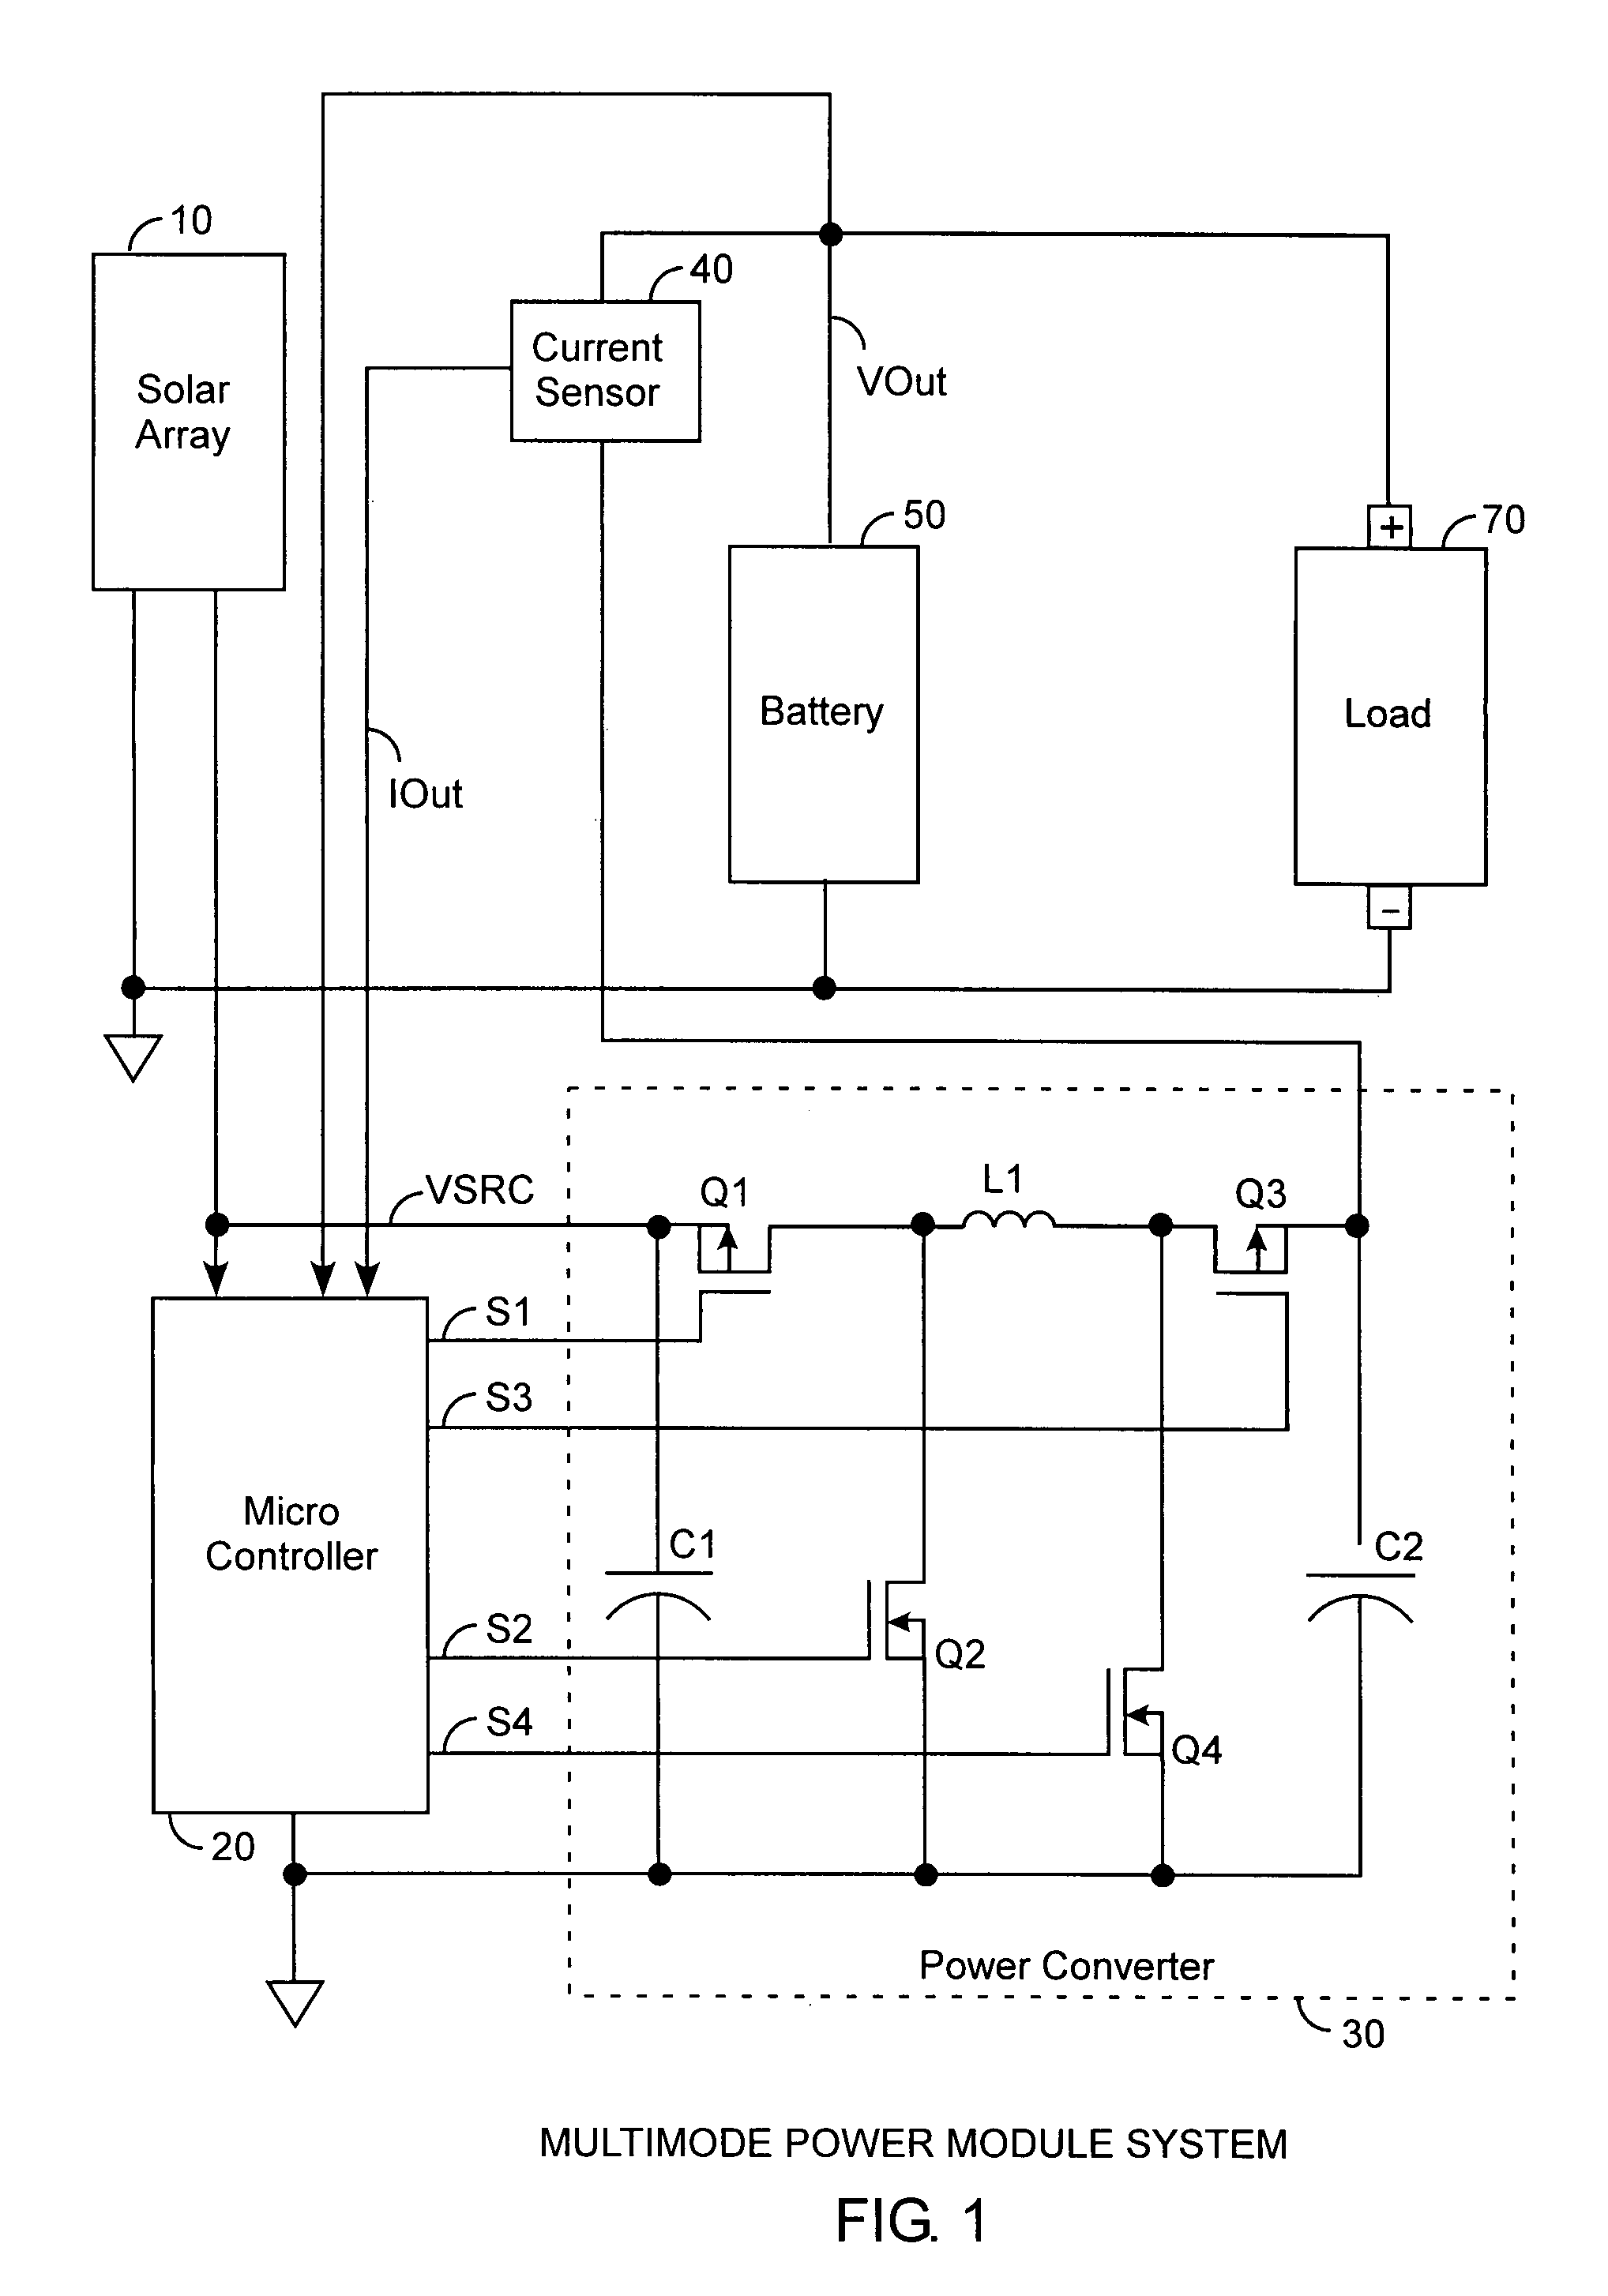 Multimode power module